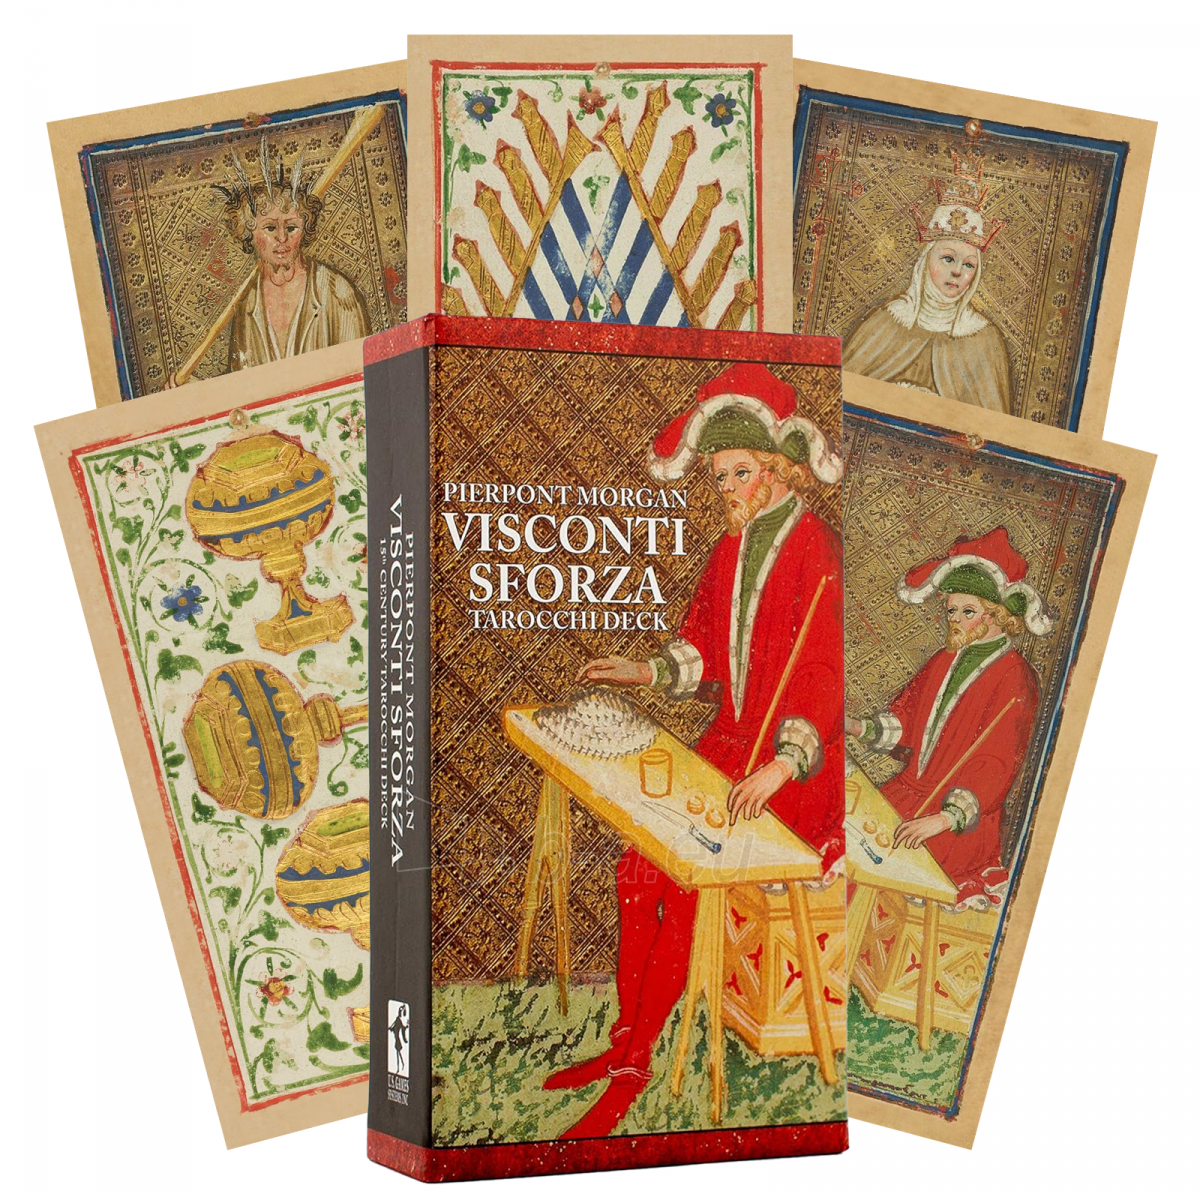 Visconti-Sforza Pierpont Morgan Tarocchi kortos paveikslėlis 12 iš 12